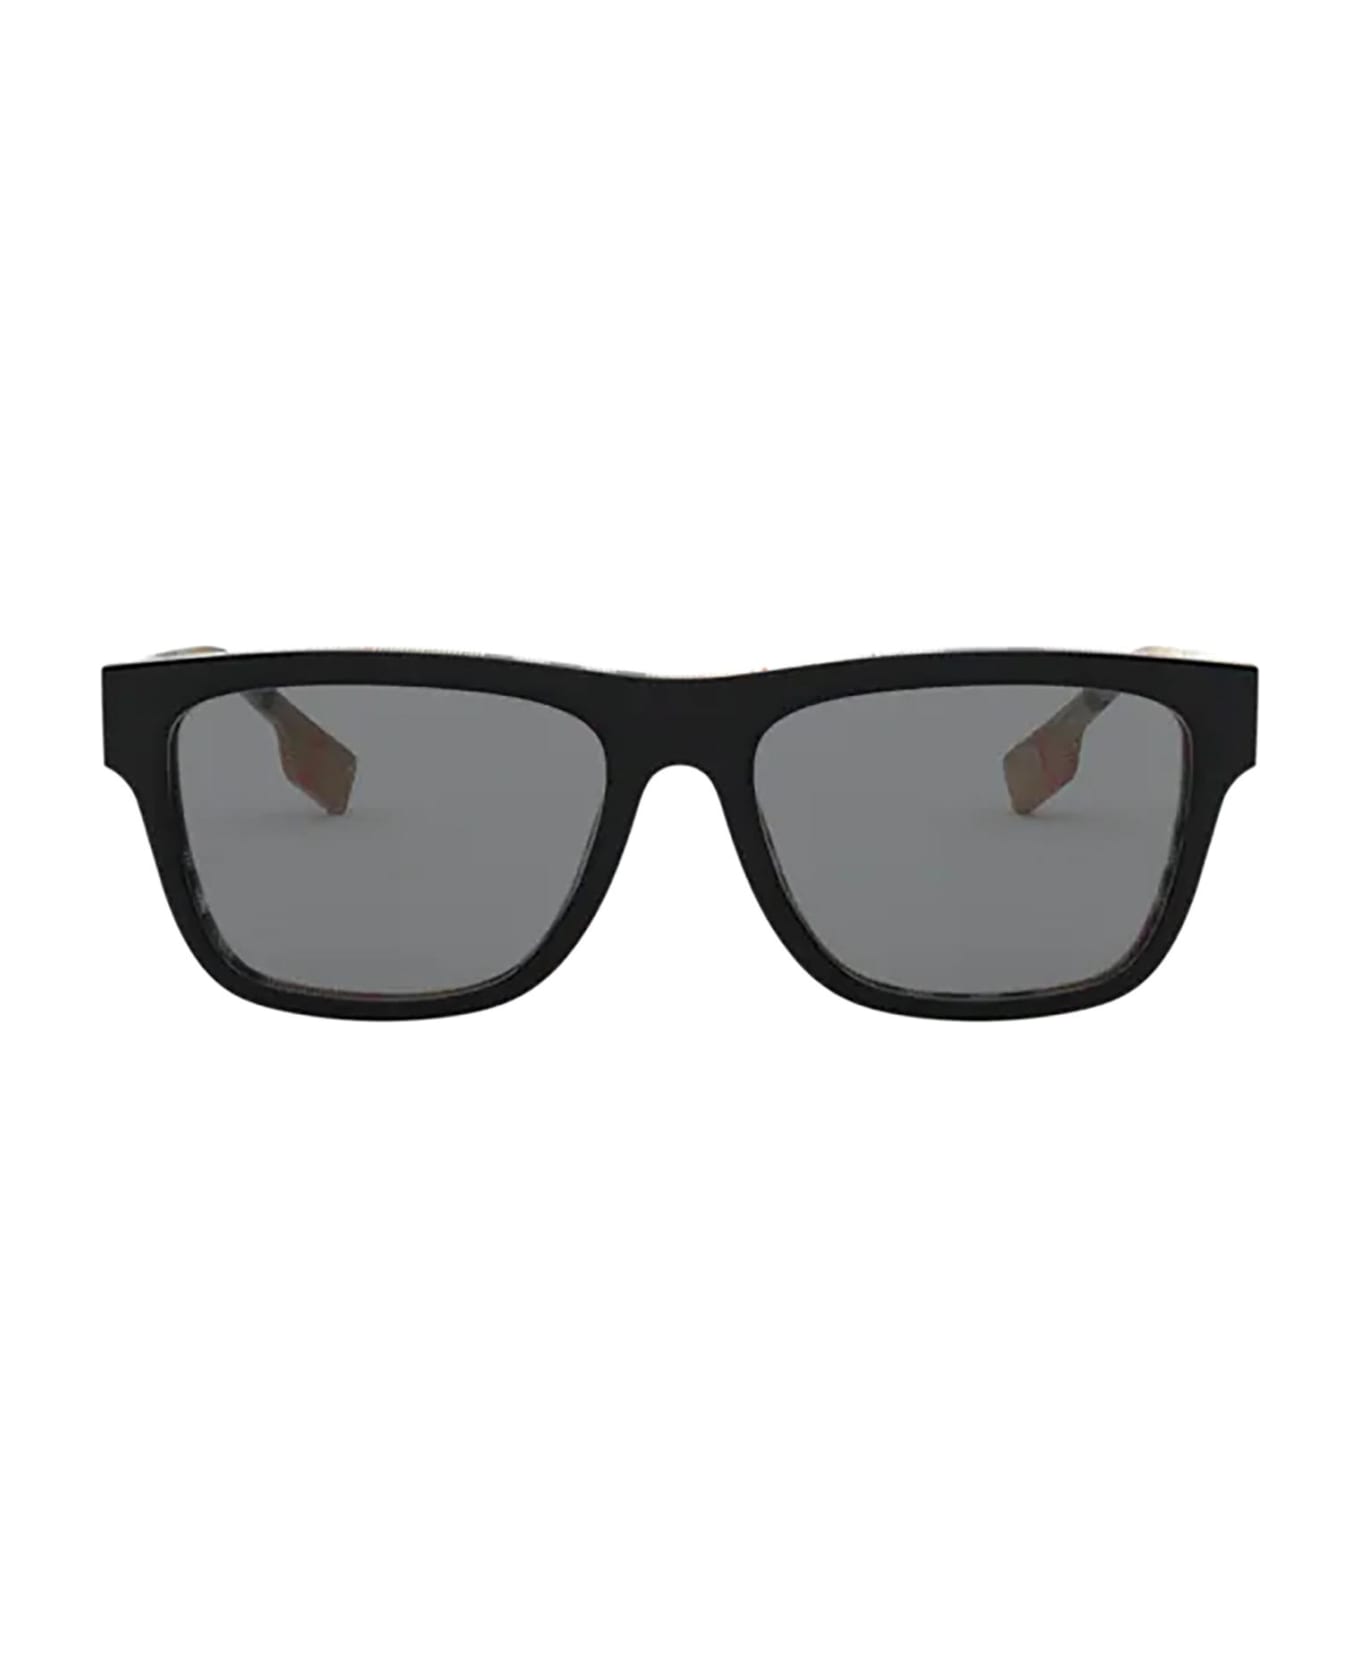 Burberry Eyewear Be4293 Top Black On Vintage Check Sunglasses - Top Black on Vintage Check